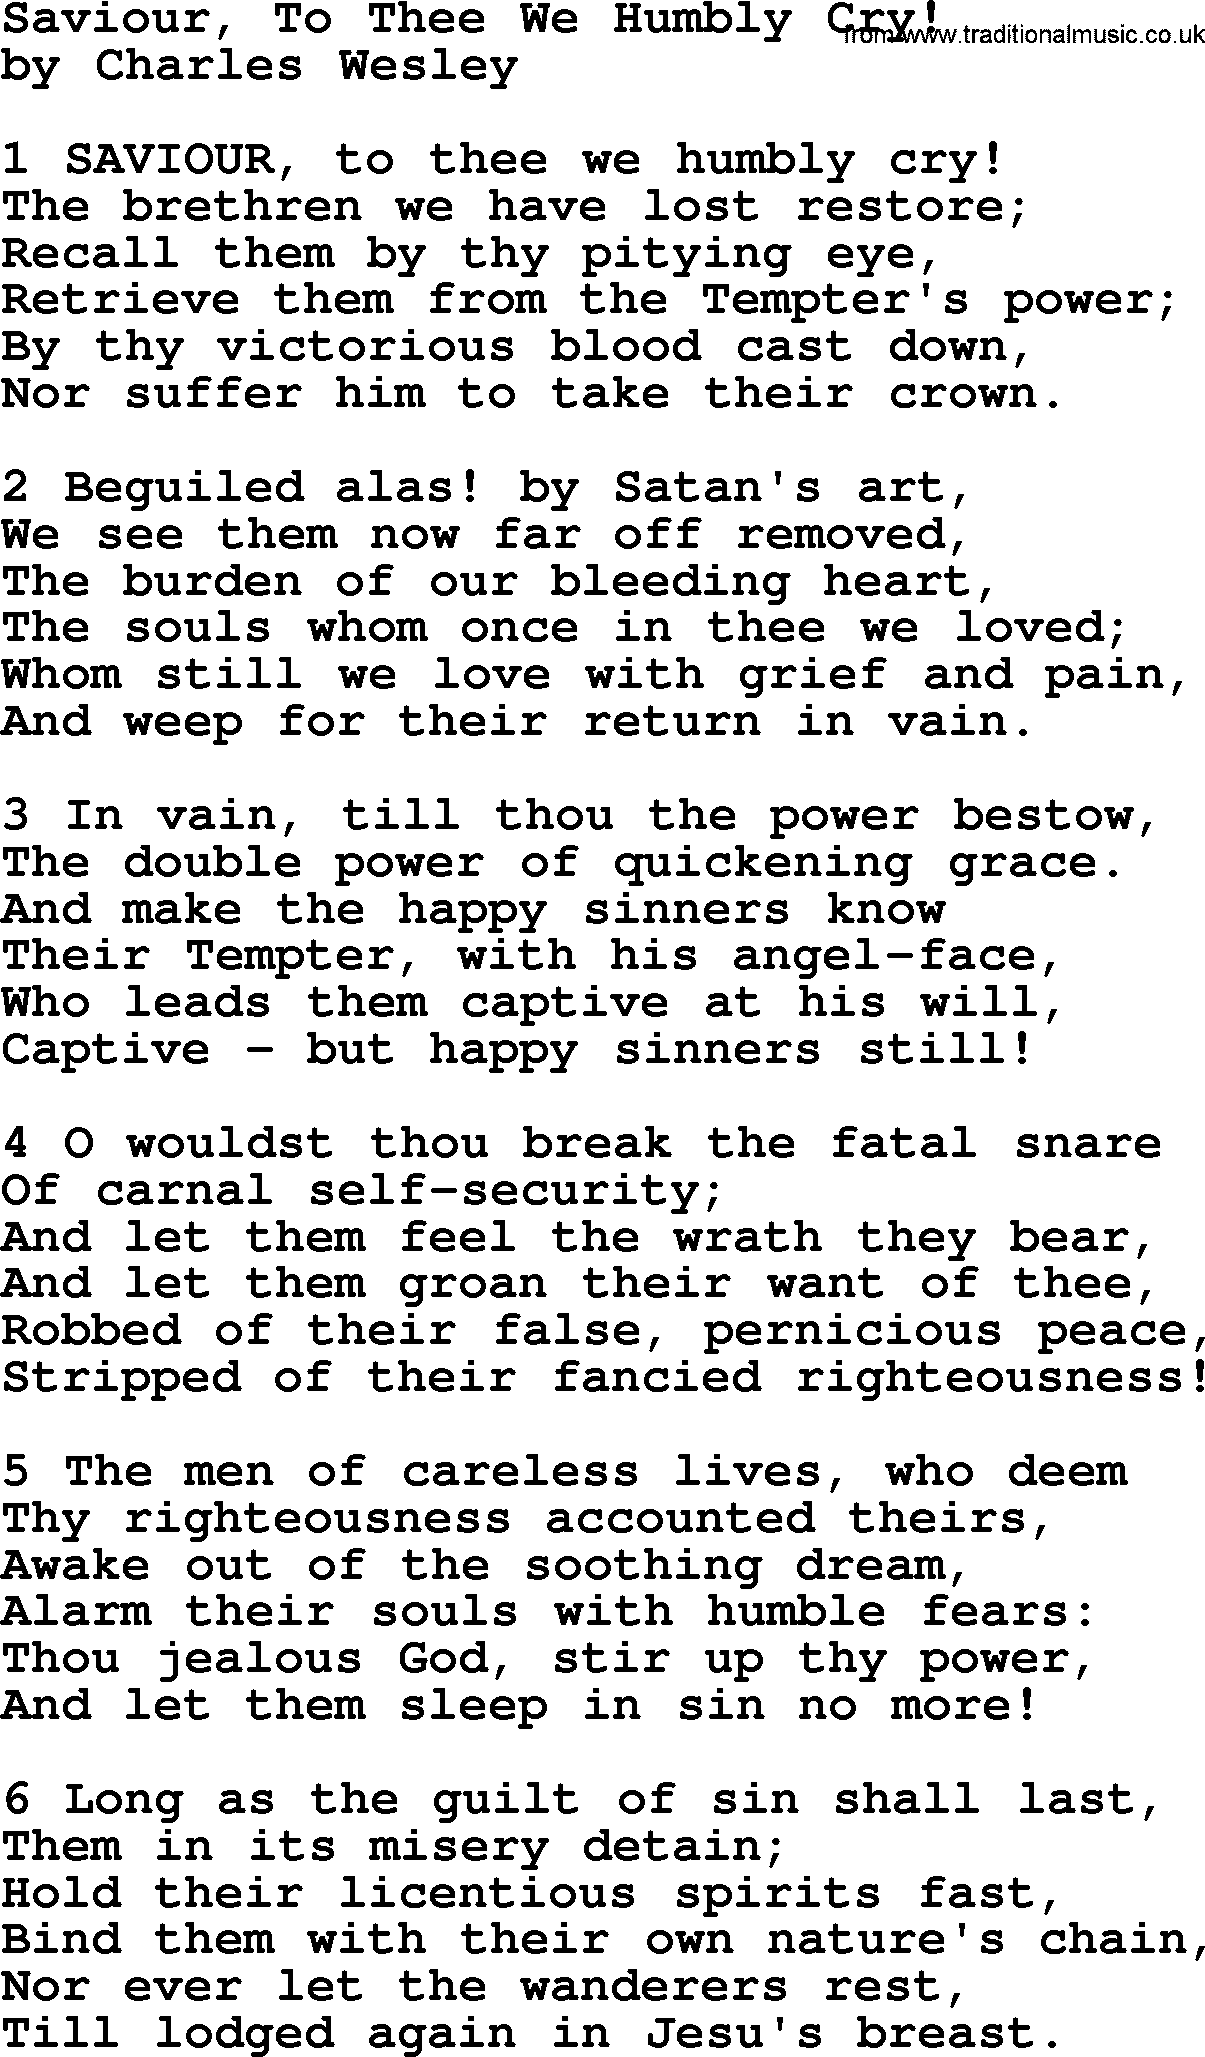 Charles Wesley hymn: Saviour, To Thee We Humbly Cry!, lyrics